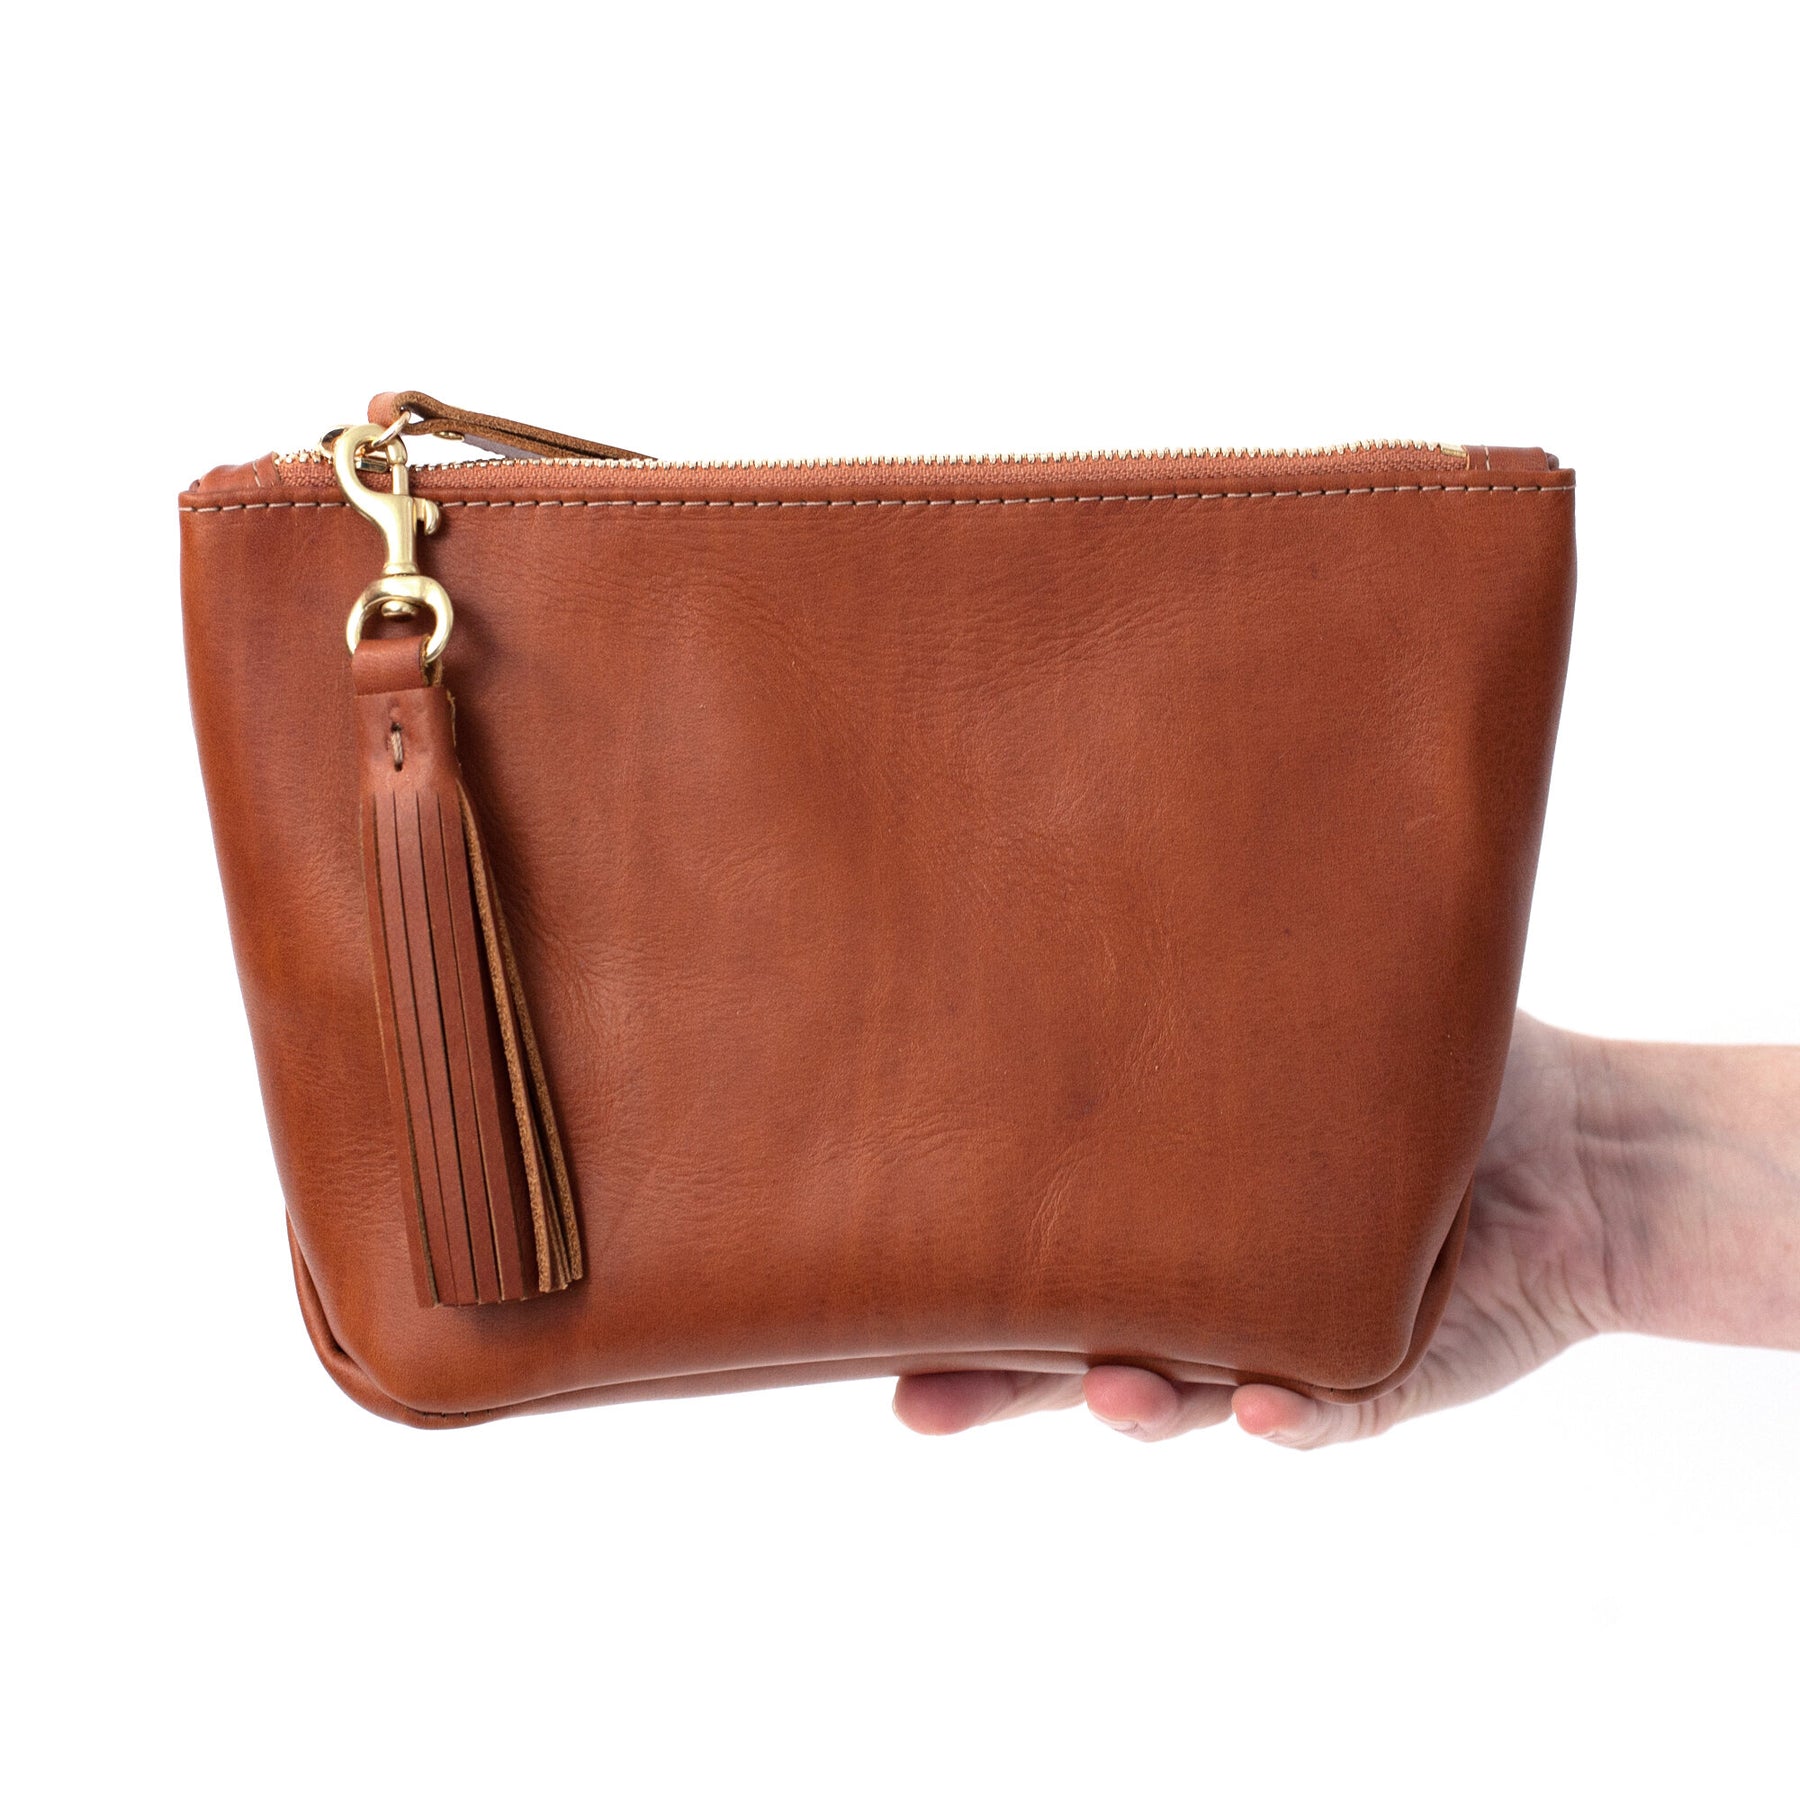 Mautto Leather Zipper Pull / Mini Tassel Accessory / Handbag Tassel Charm Electric Lime Leather